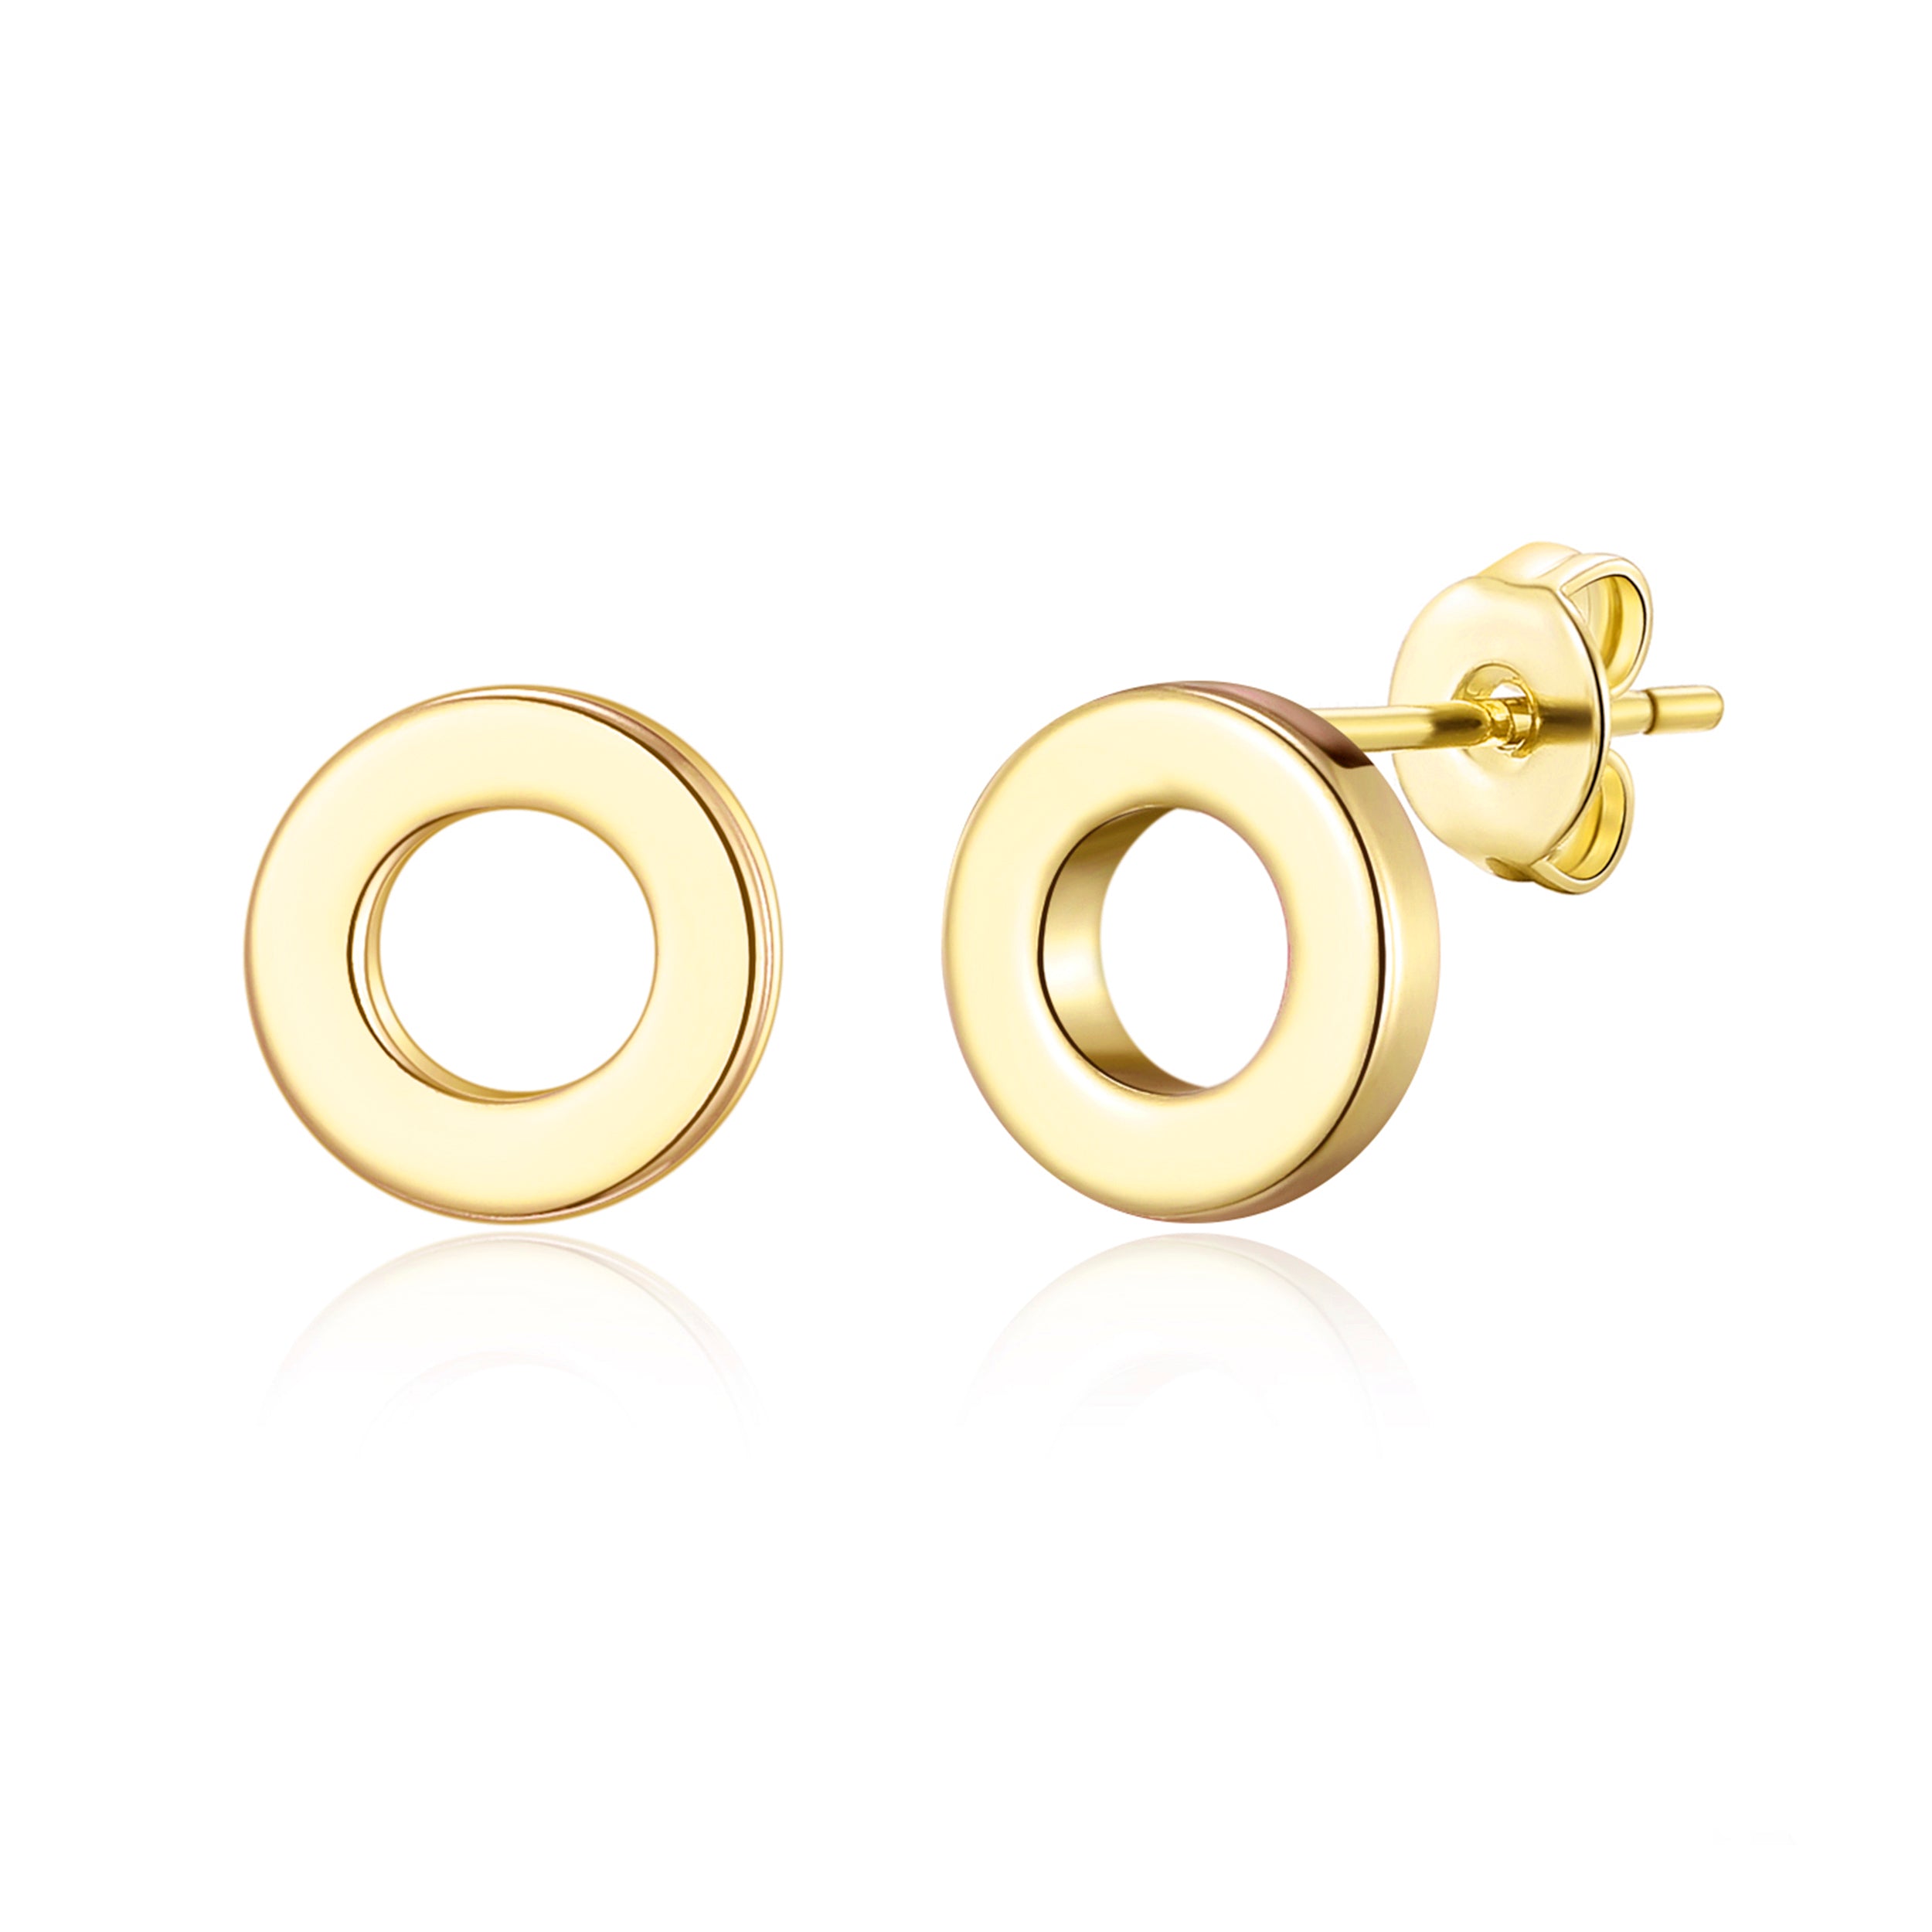 Gold Plated Circle Stud Earrings by Philip Jones Jewellery